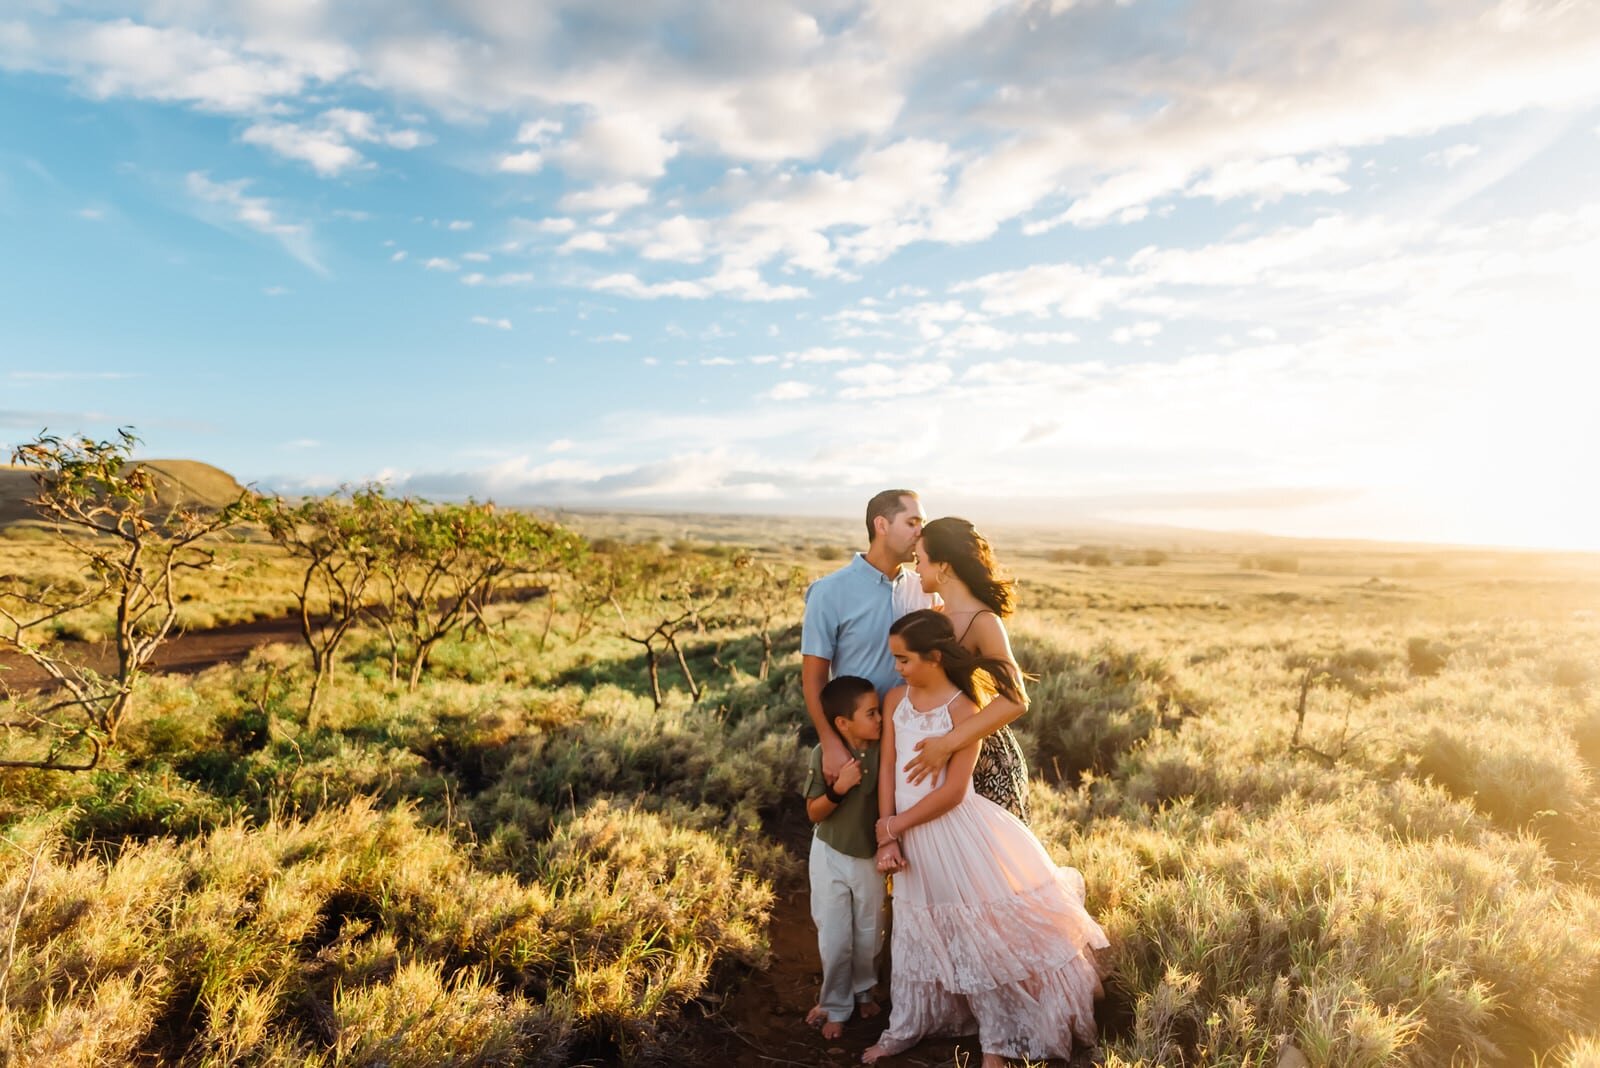 Big-Island-Hawaii-Award-Winning-Family-Photographer-3.jpg